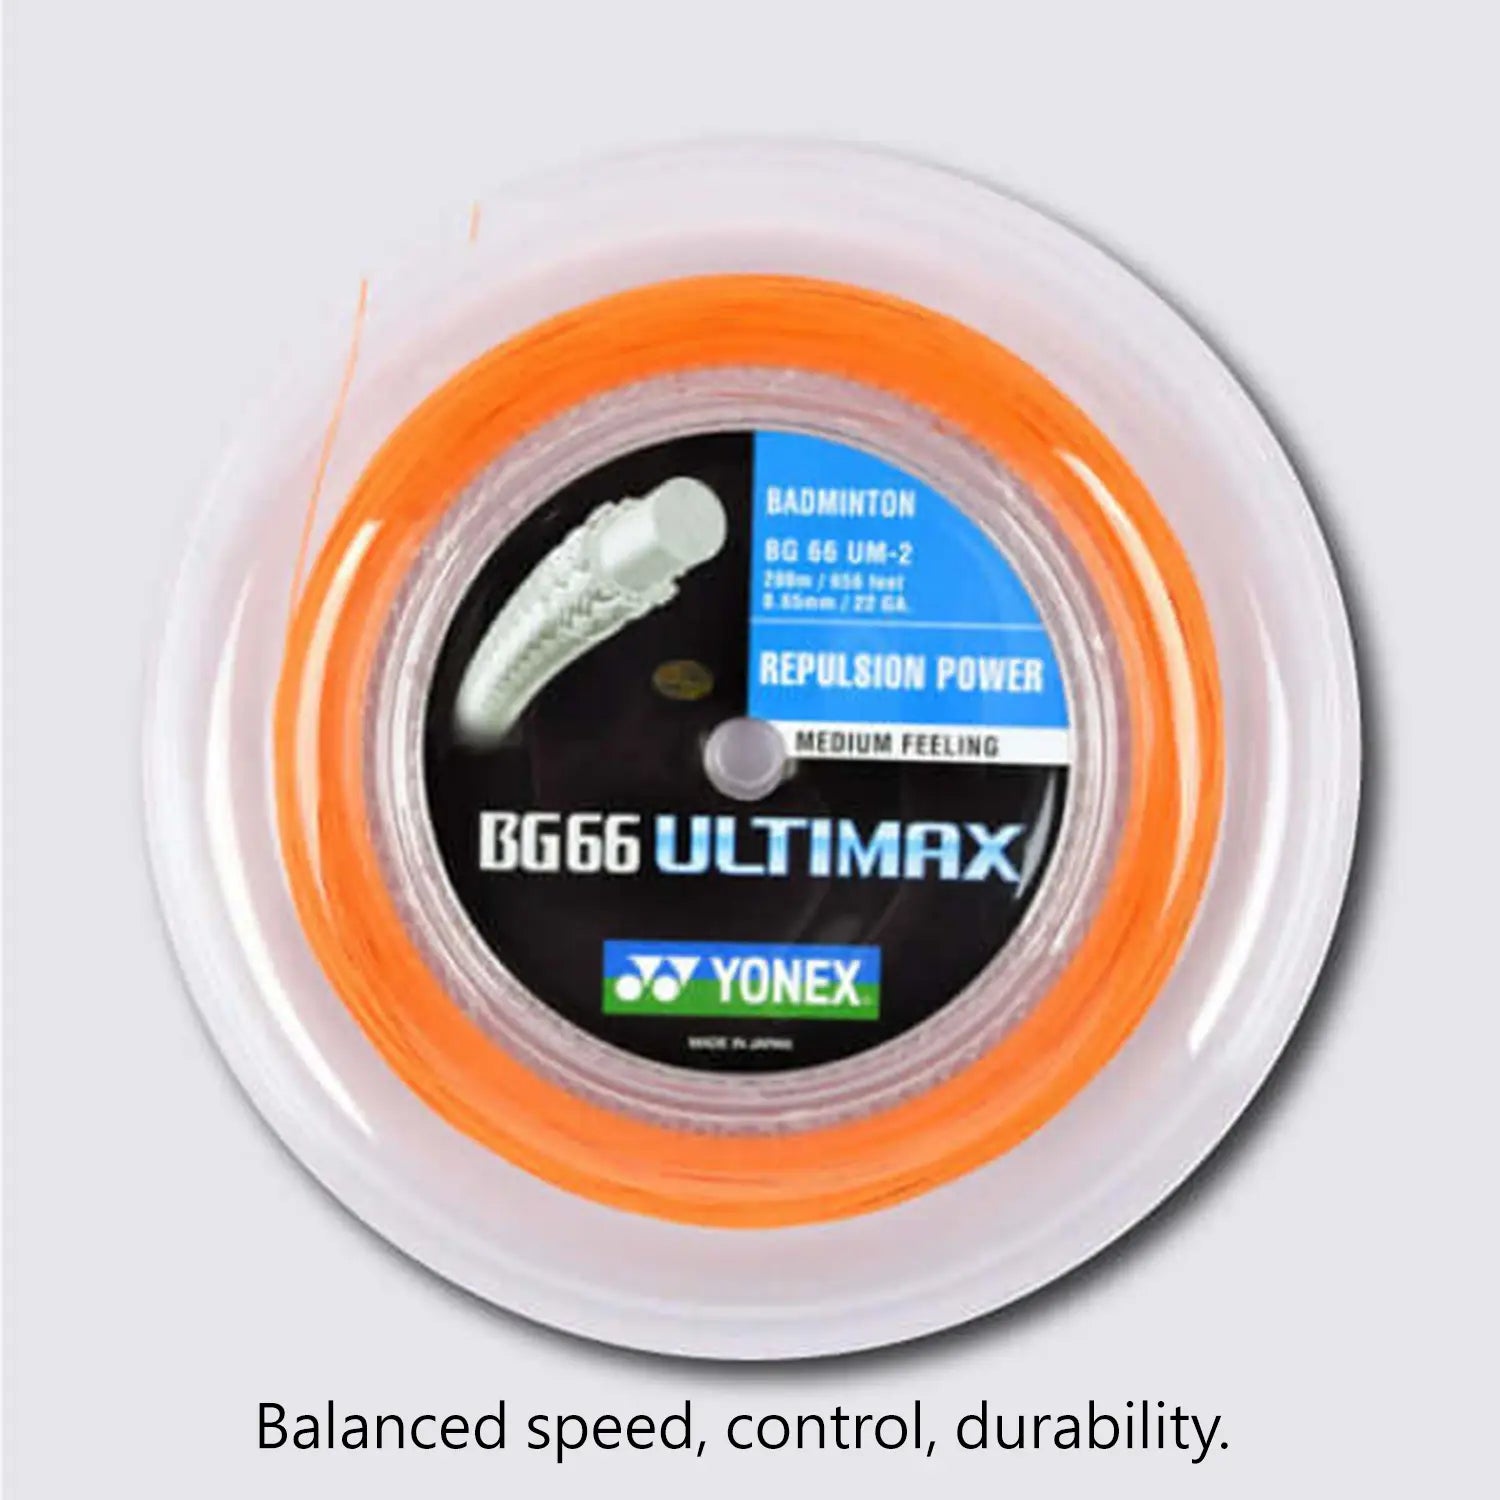 Yonex BG 66 Ultimax 200m Badminton String (Orange) 